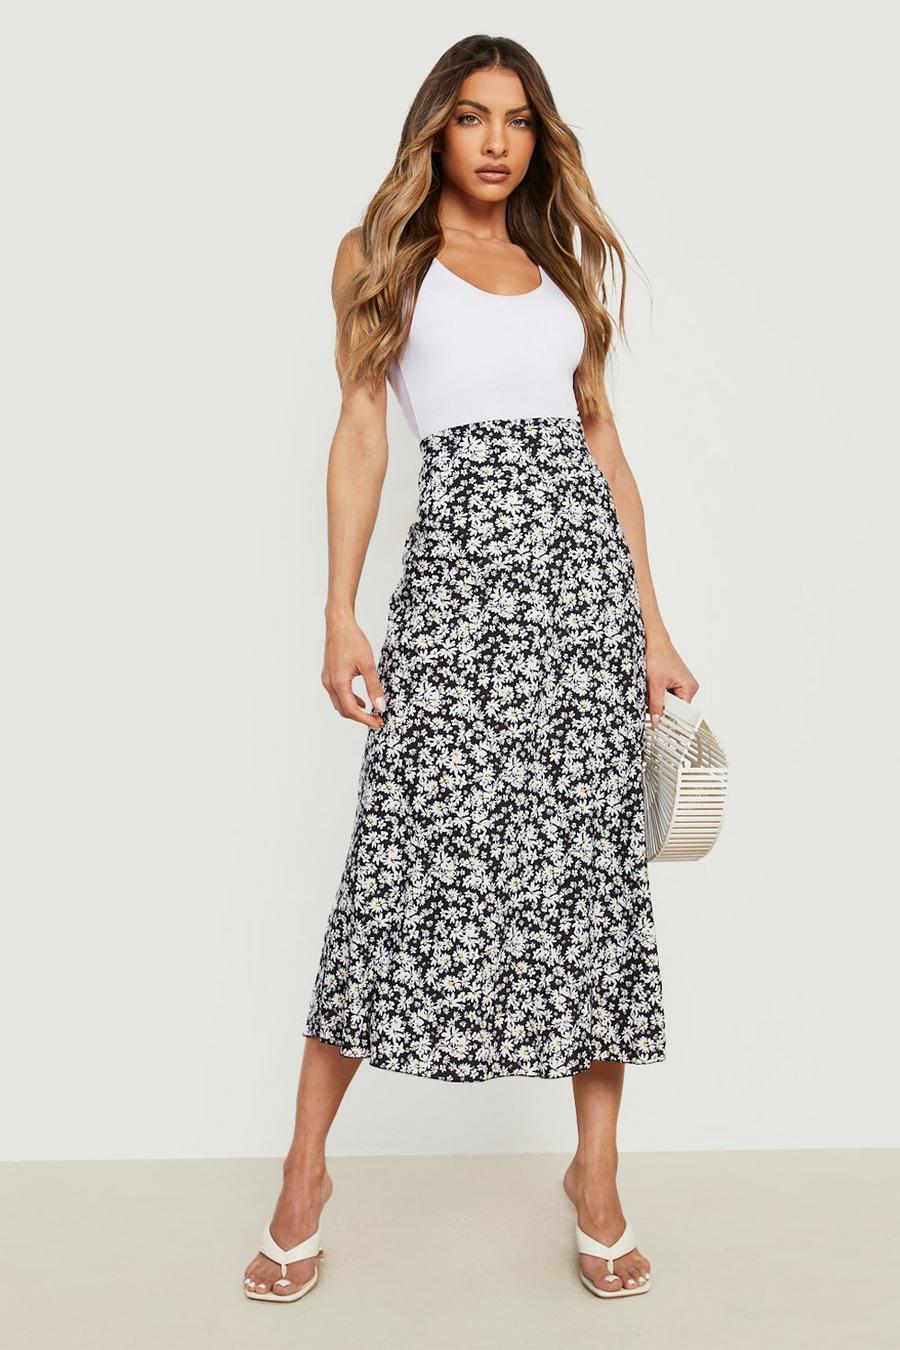 Mono multi Floral Print Light Weight Woven Maxi Skirt